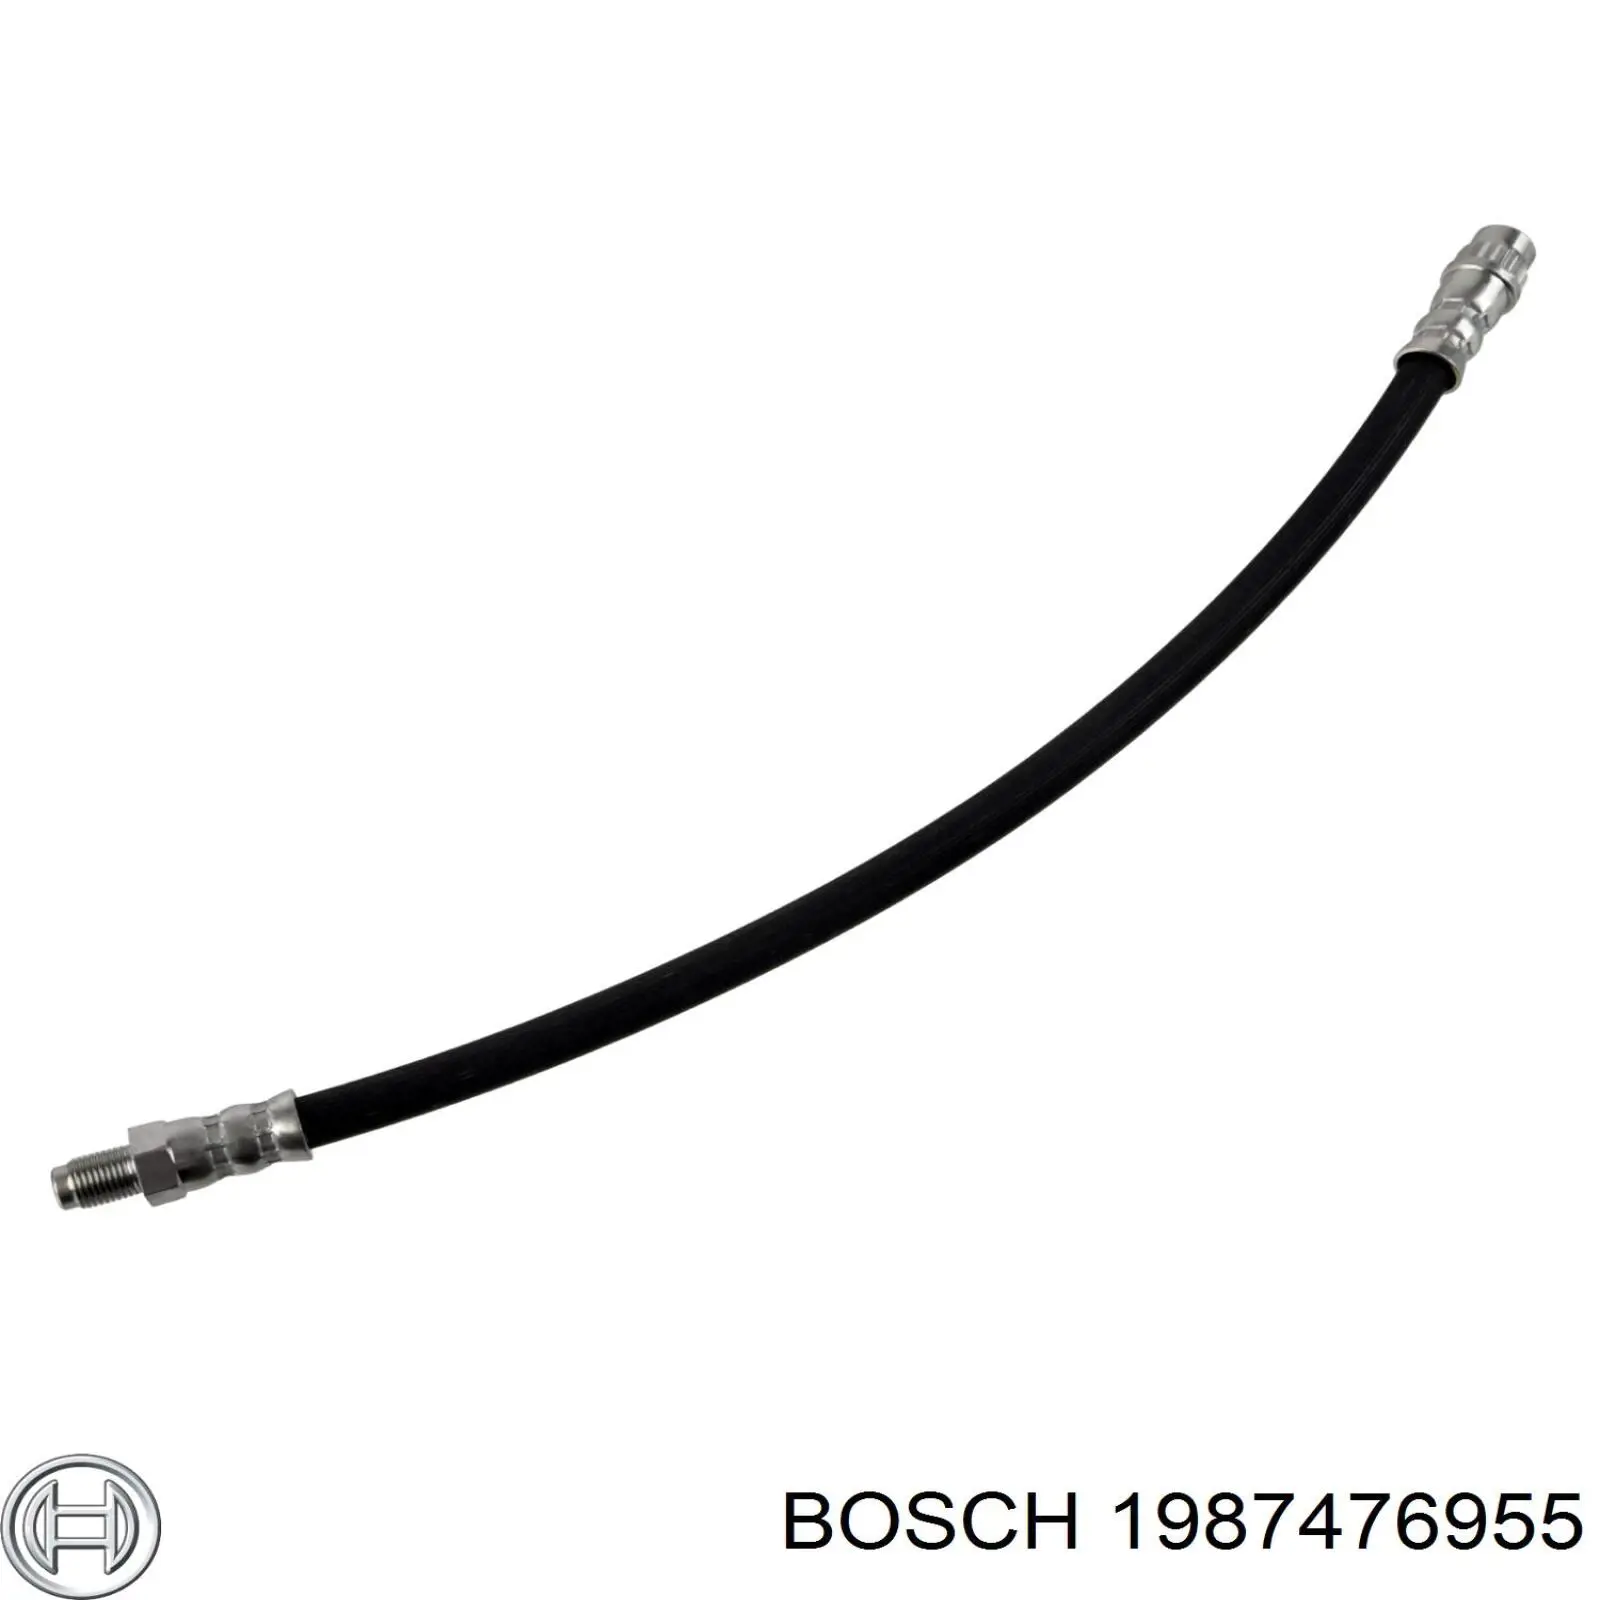 1987476955 Bosch latiguillo de freno trasero